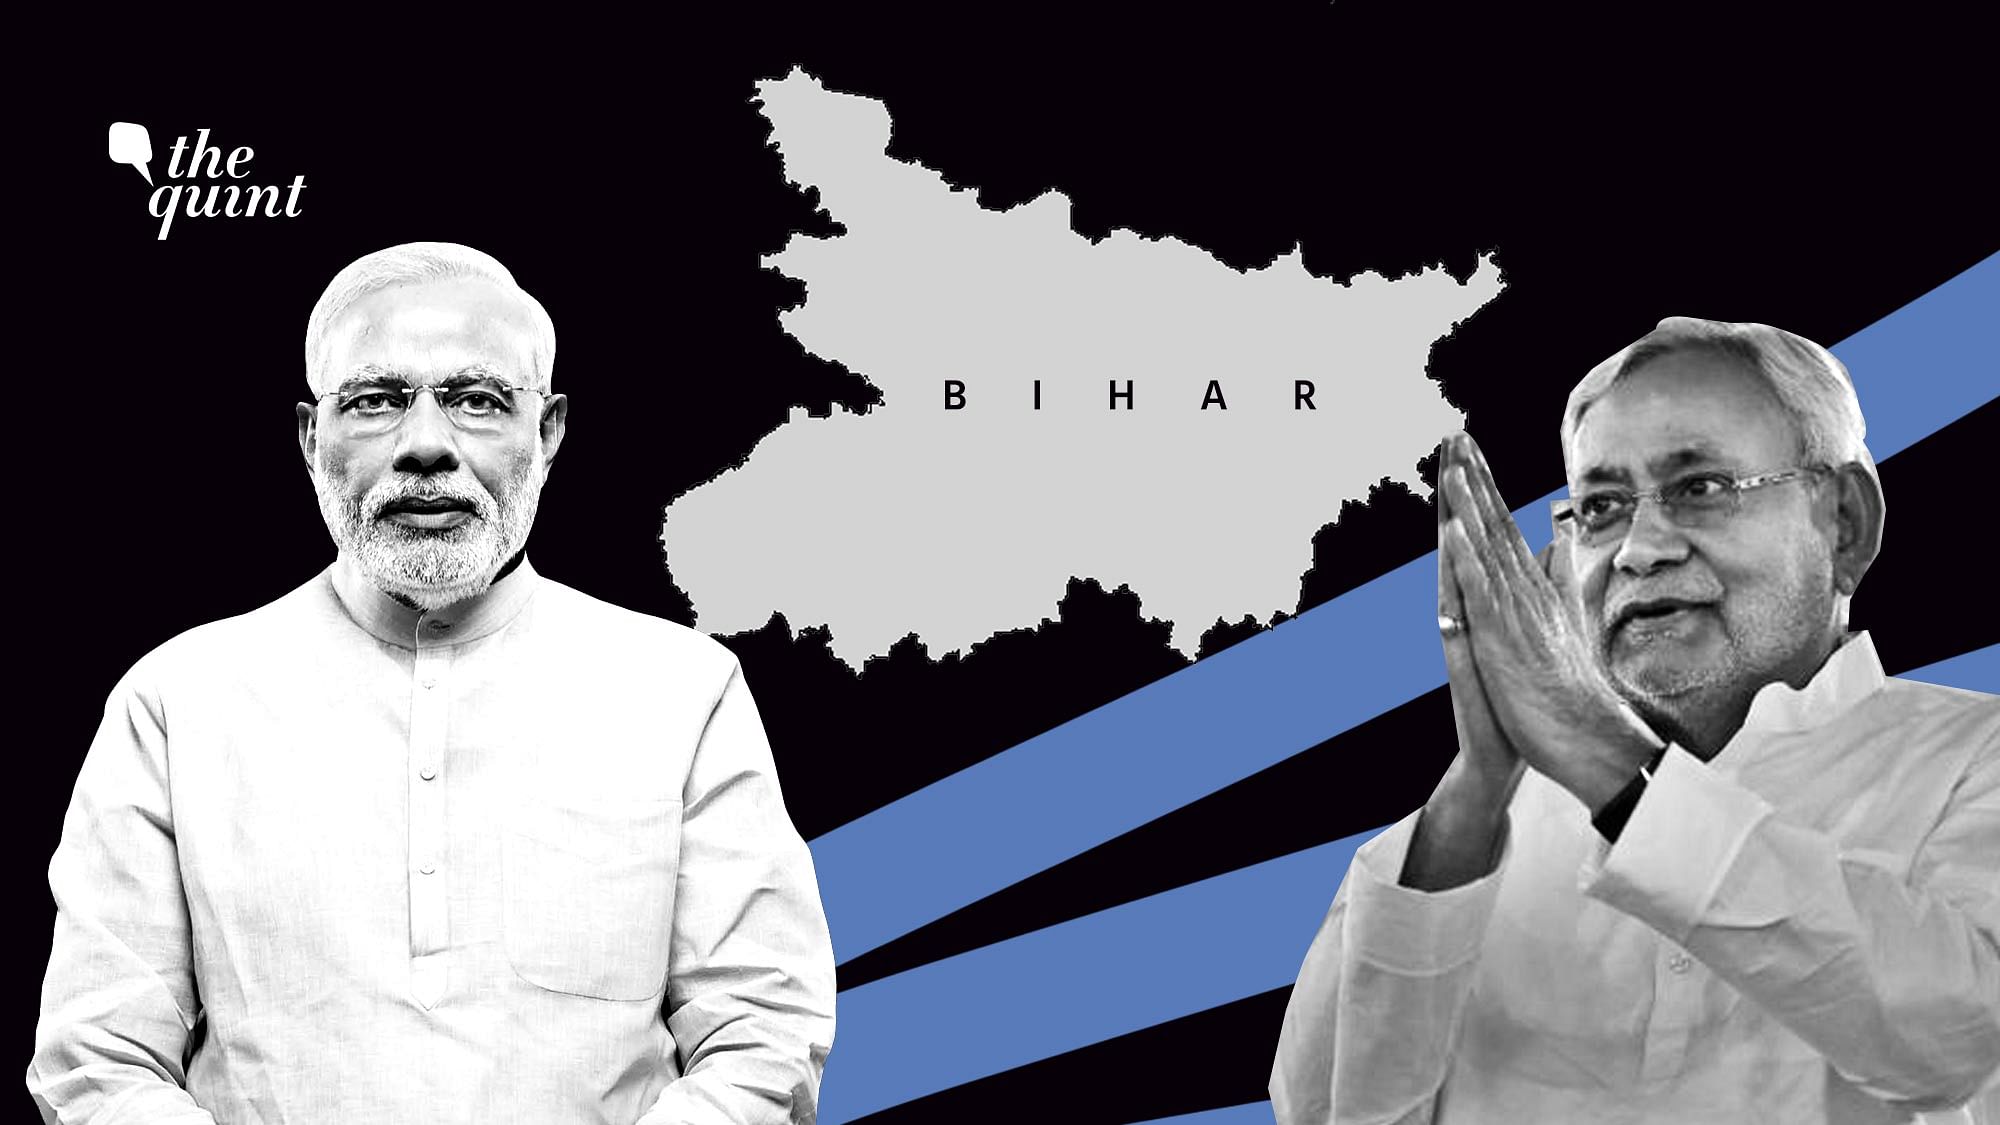 Image of PM Modi (L) and Nitish Kumar (R) used for representational purposes.